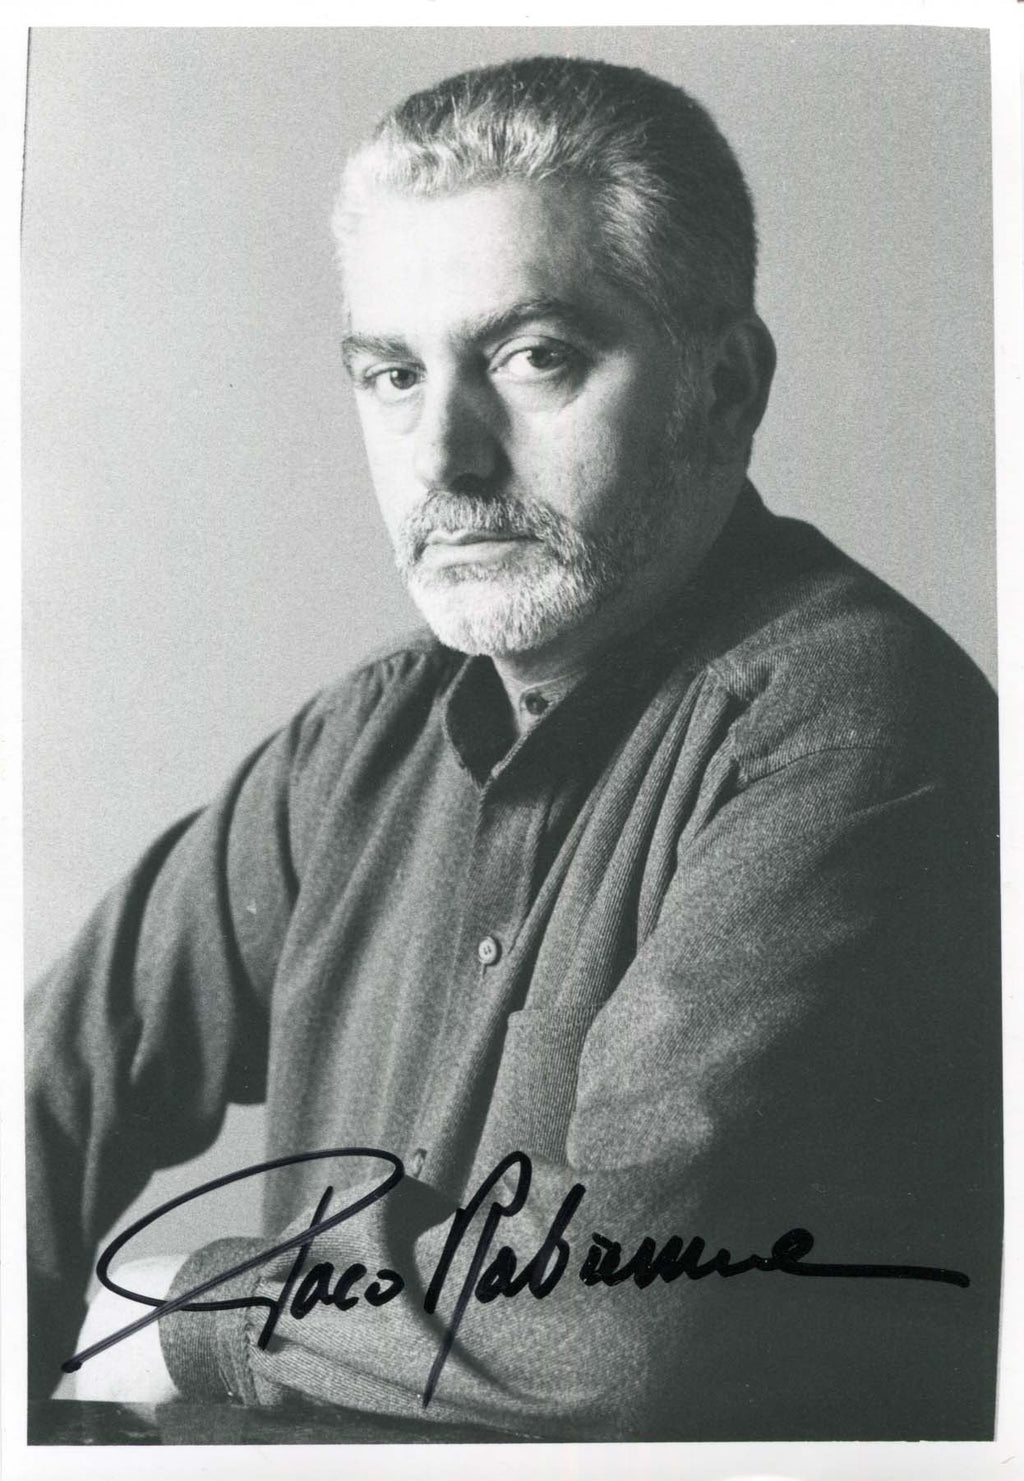 Paco Rabanne Autograph | signed photographs